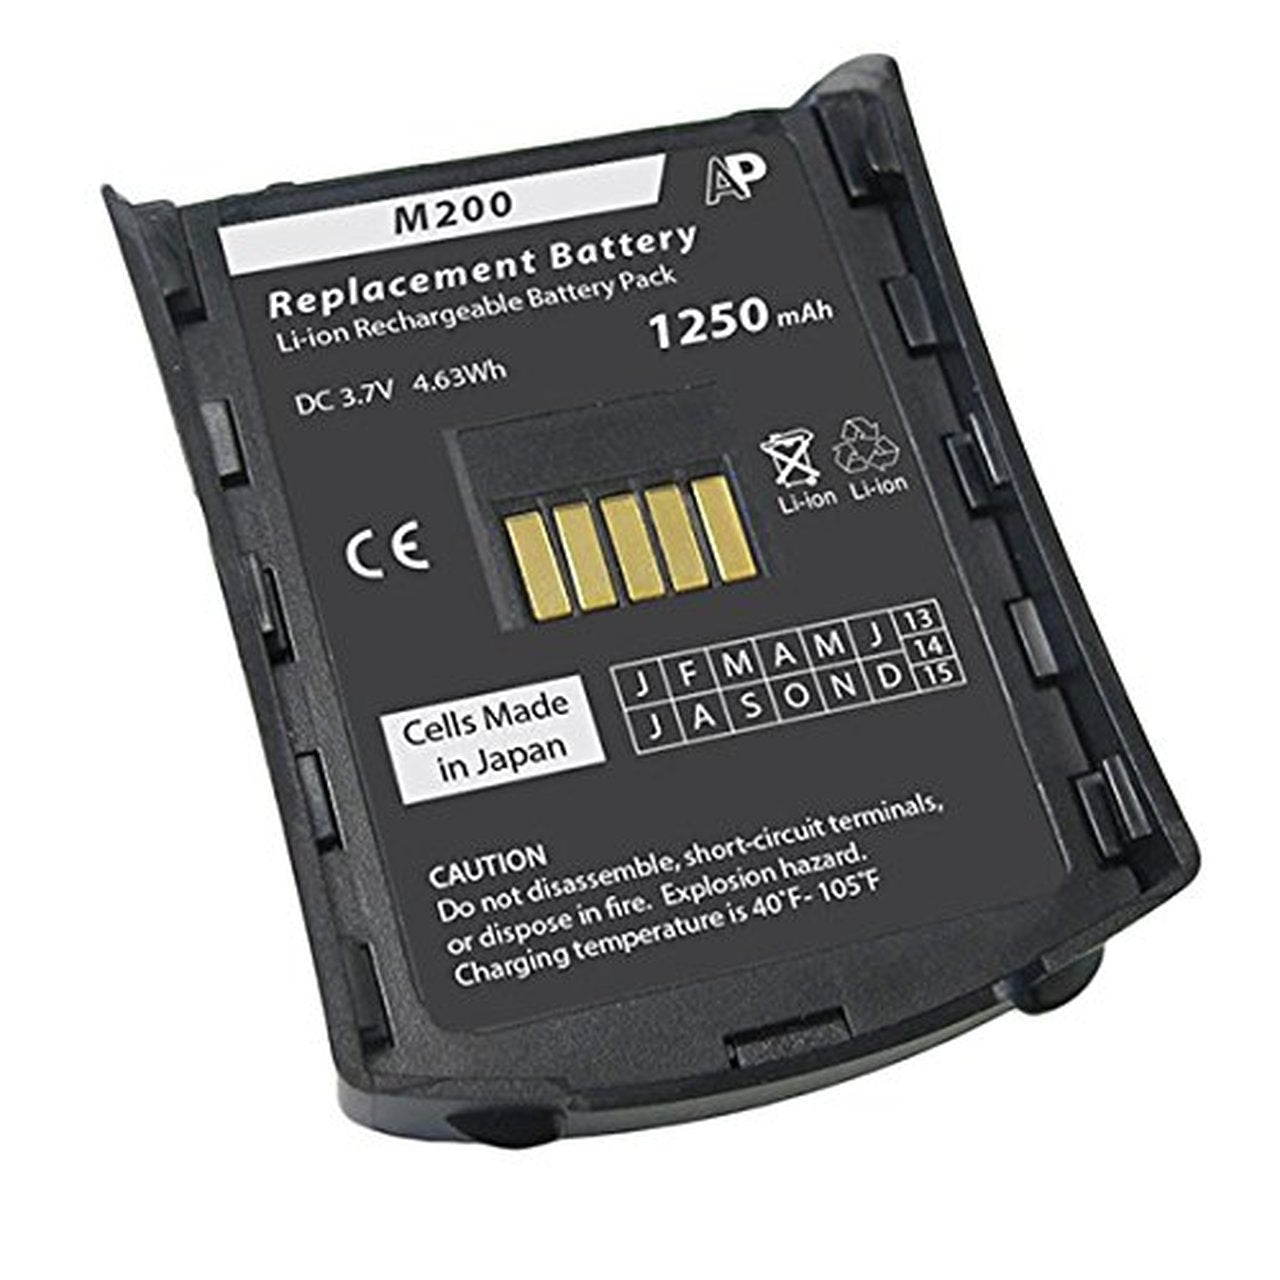 Alcatel Reflexes Mobile 200 Battery